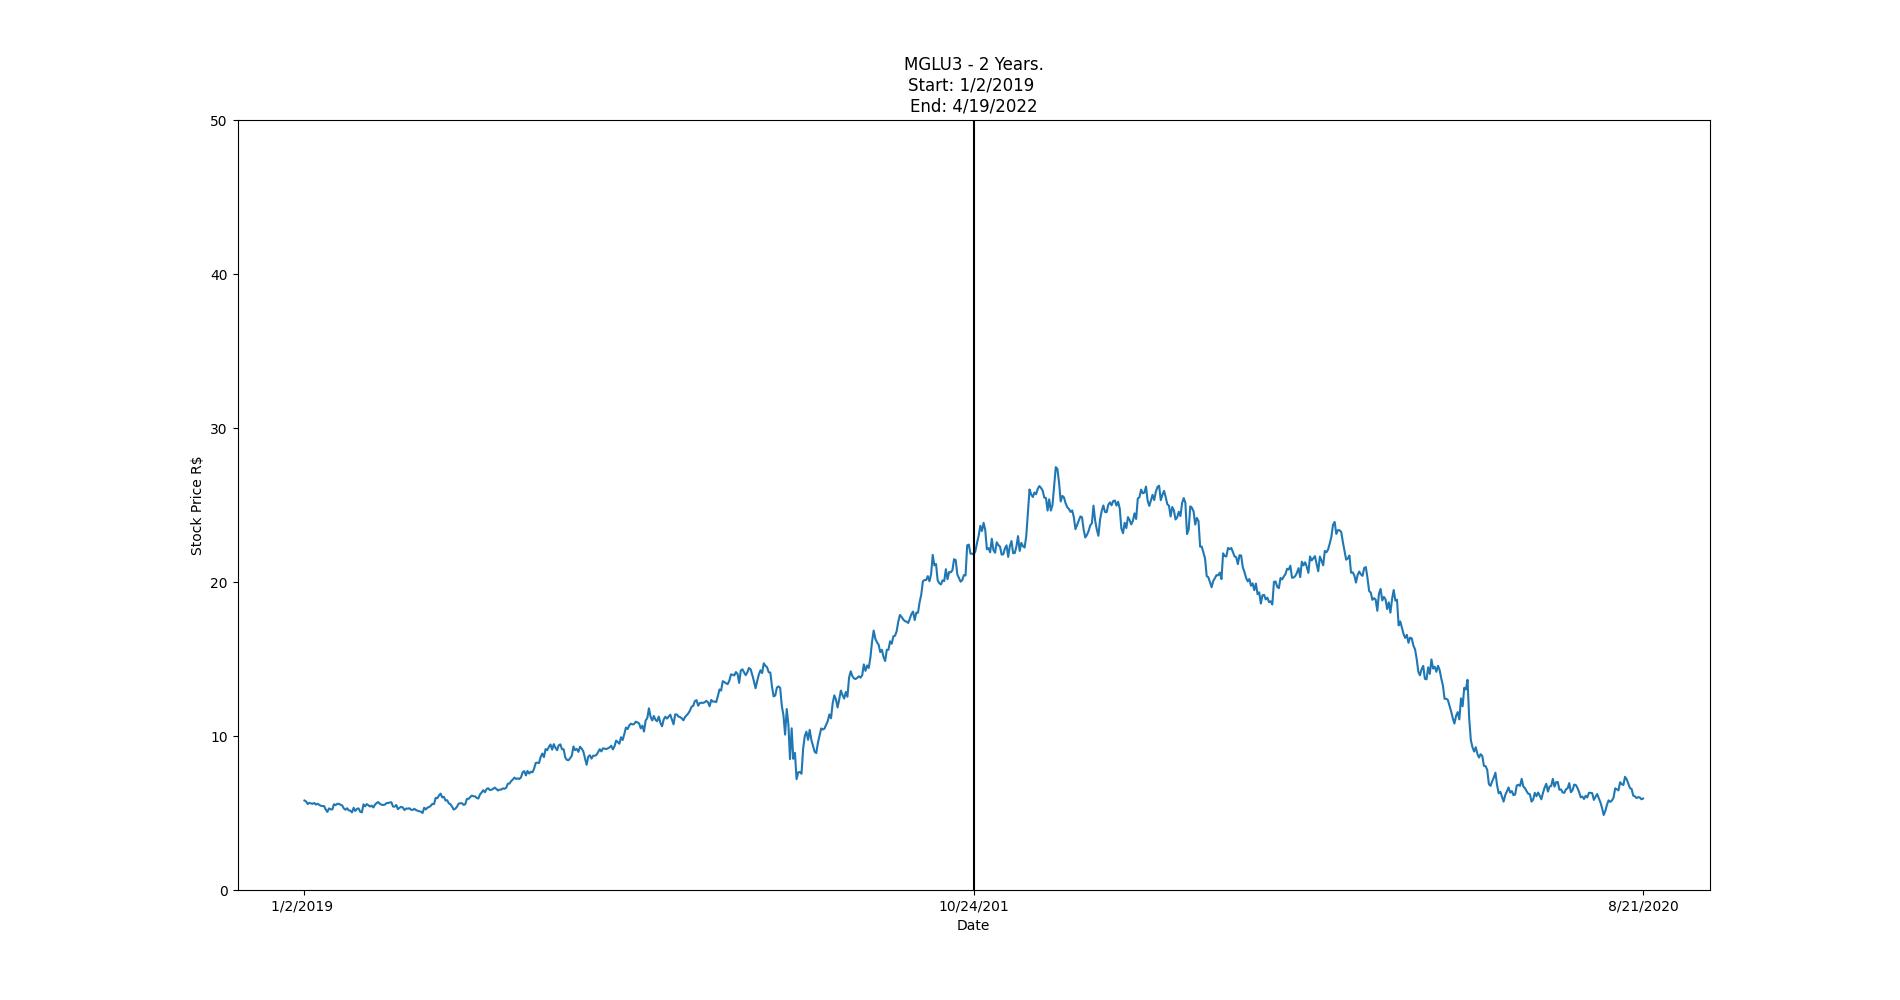 Figura 2:MGLU3 Stock Price.